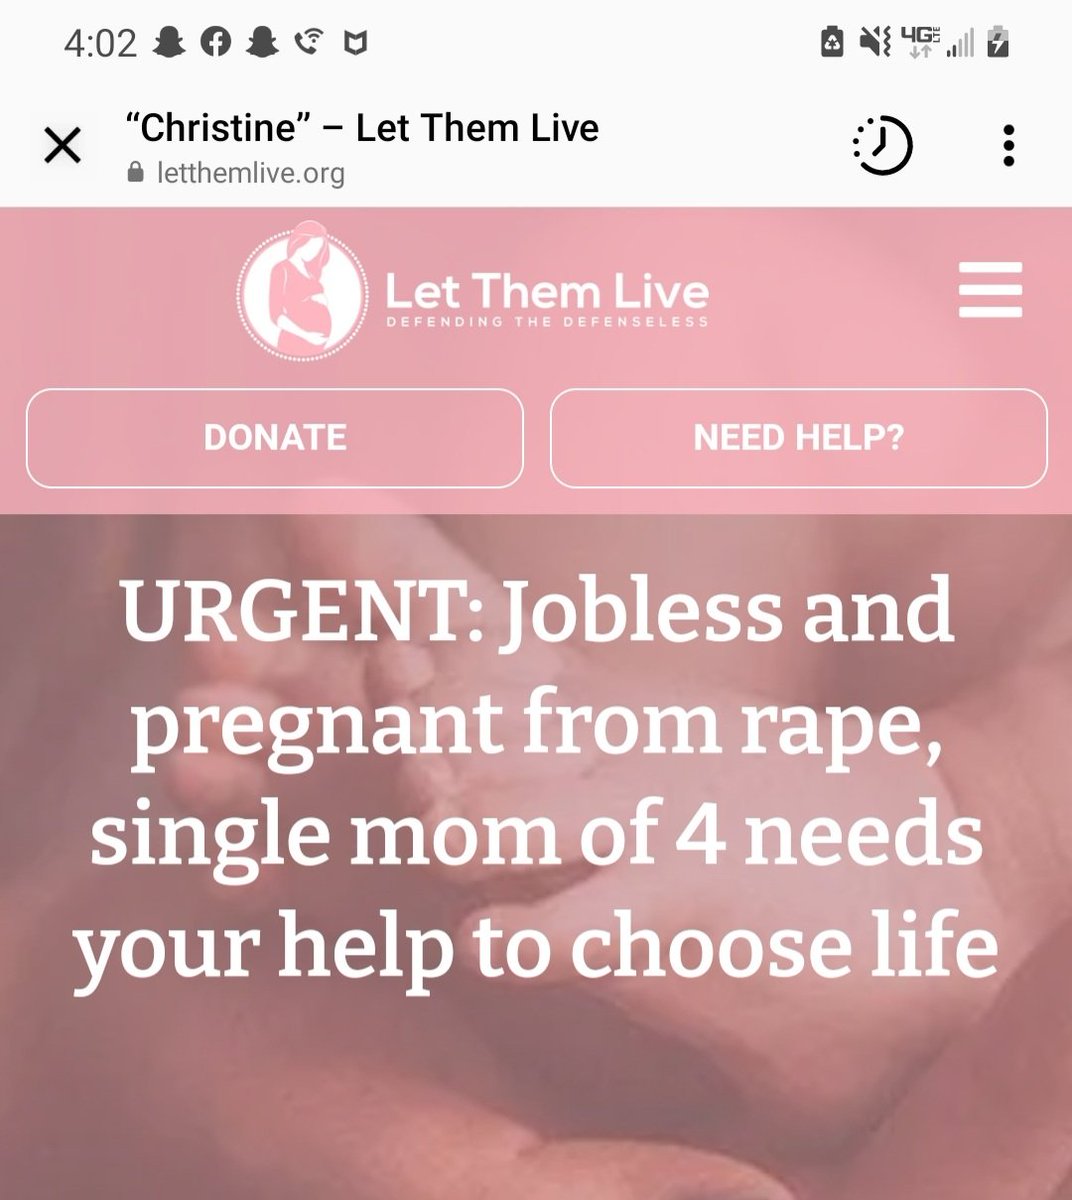 To donate to Christine, please go to letthemlive.org 🙏🙏  #prolife #letthemlive #supportmoms #baby #pregnancy #unplannedpregnancy #pregnancycare #crisispregnancy #christian #faith